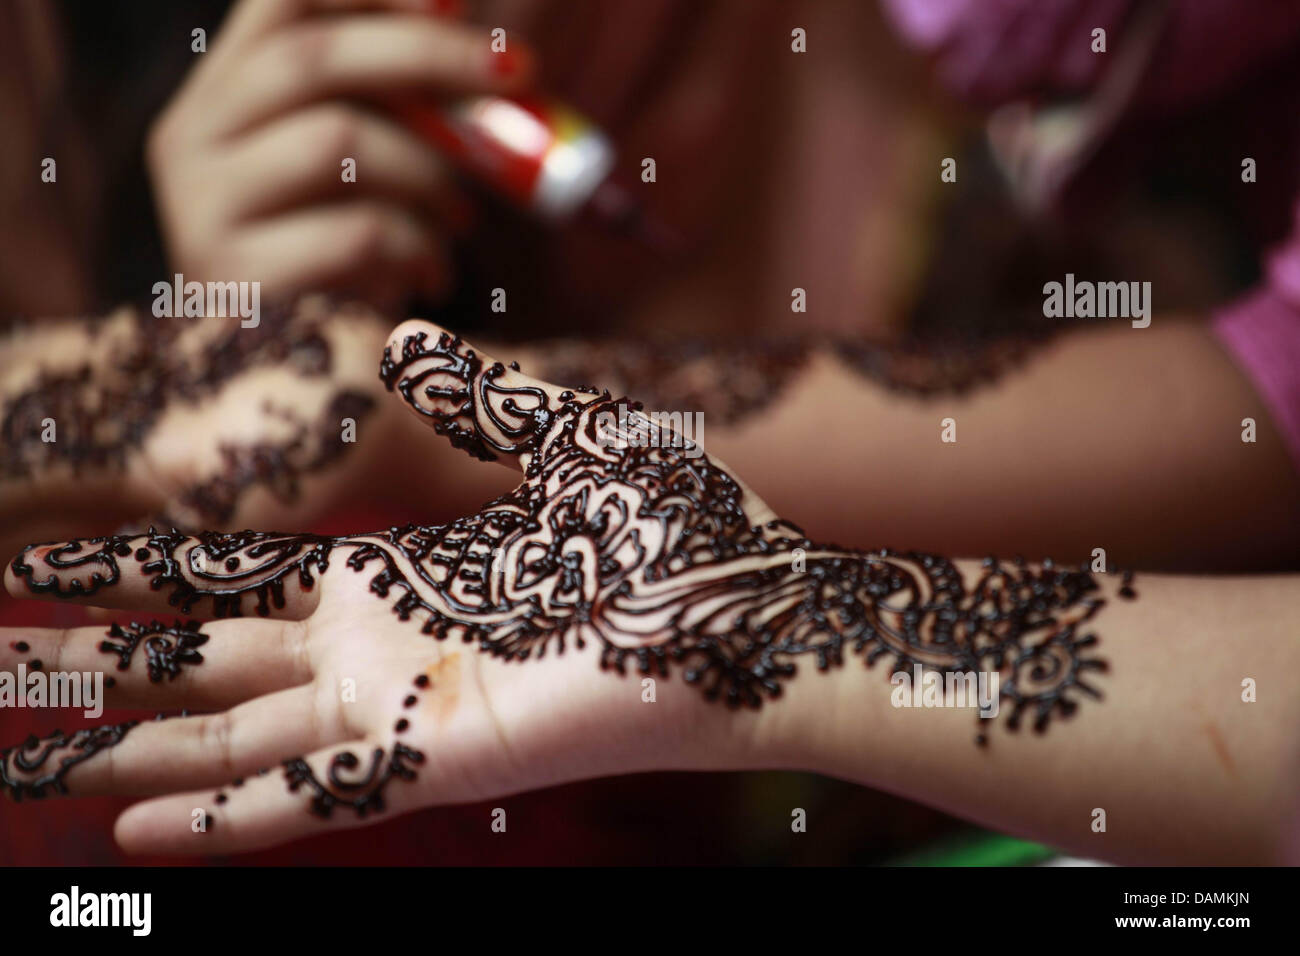 Best Mehndi Designs for Eid 2023 [Pictures] - Lens